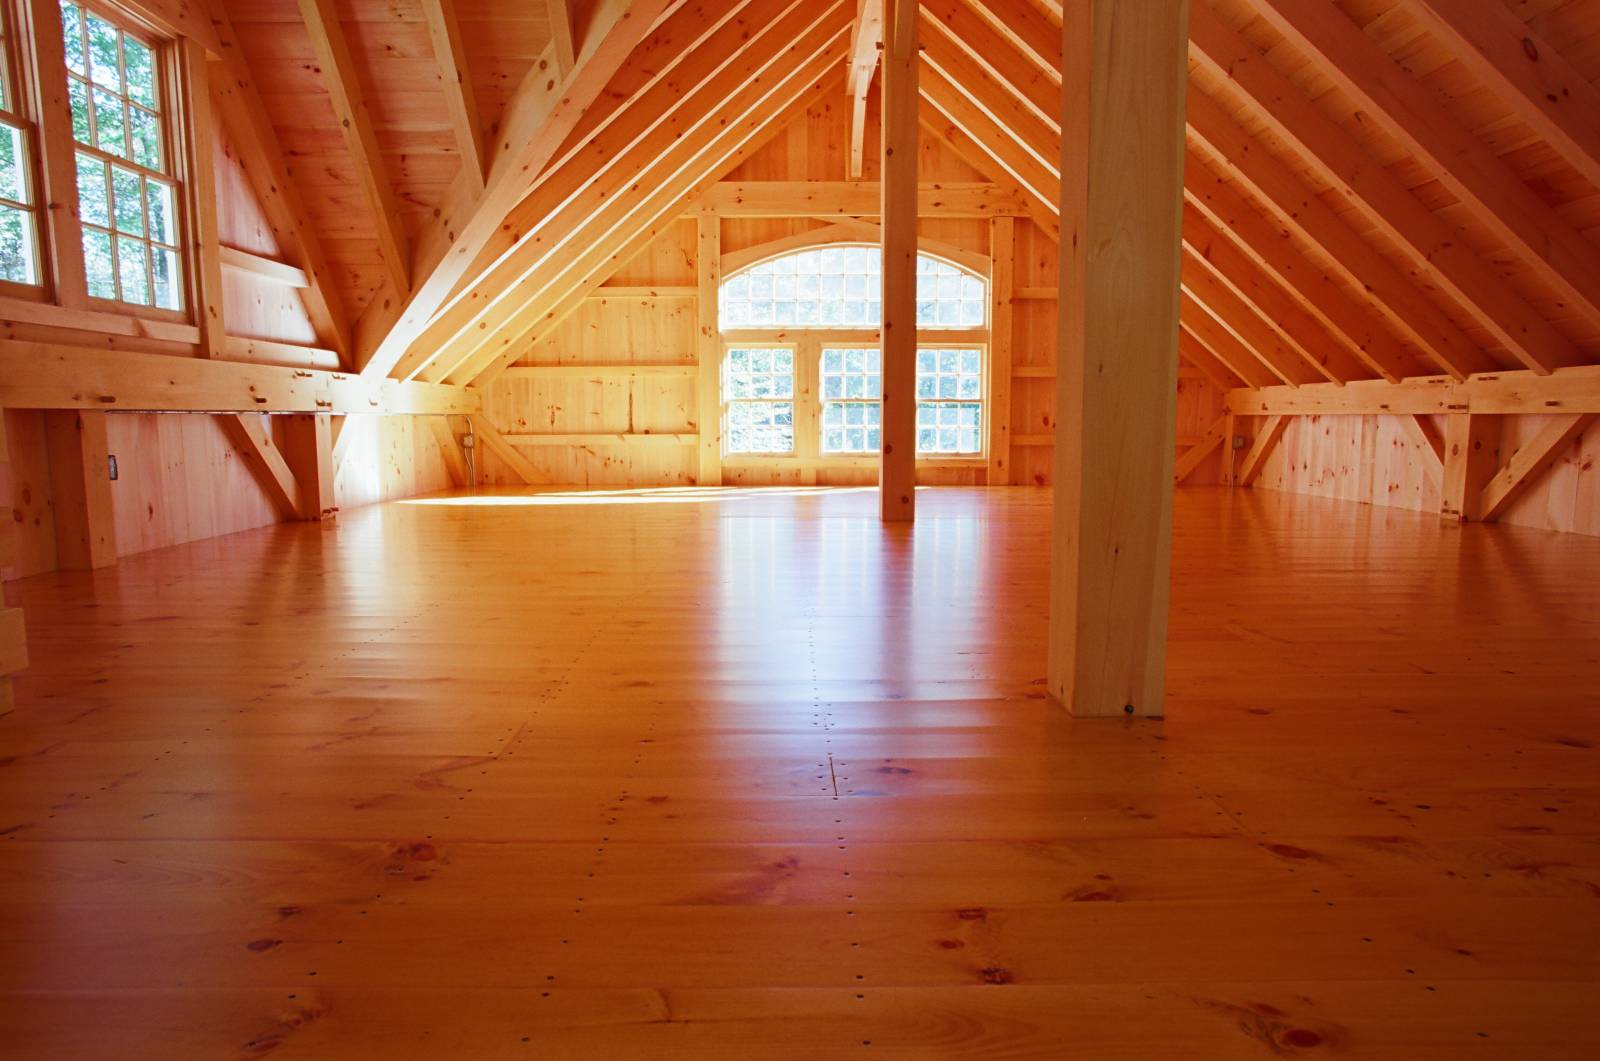 Smooth & shiny wood floor inside the bank barn on second floor